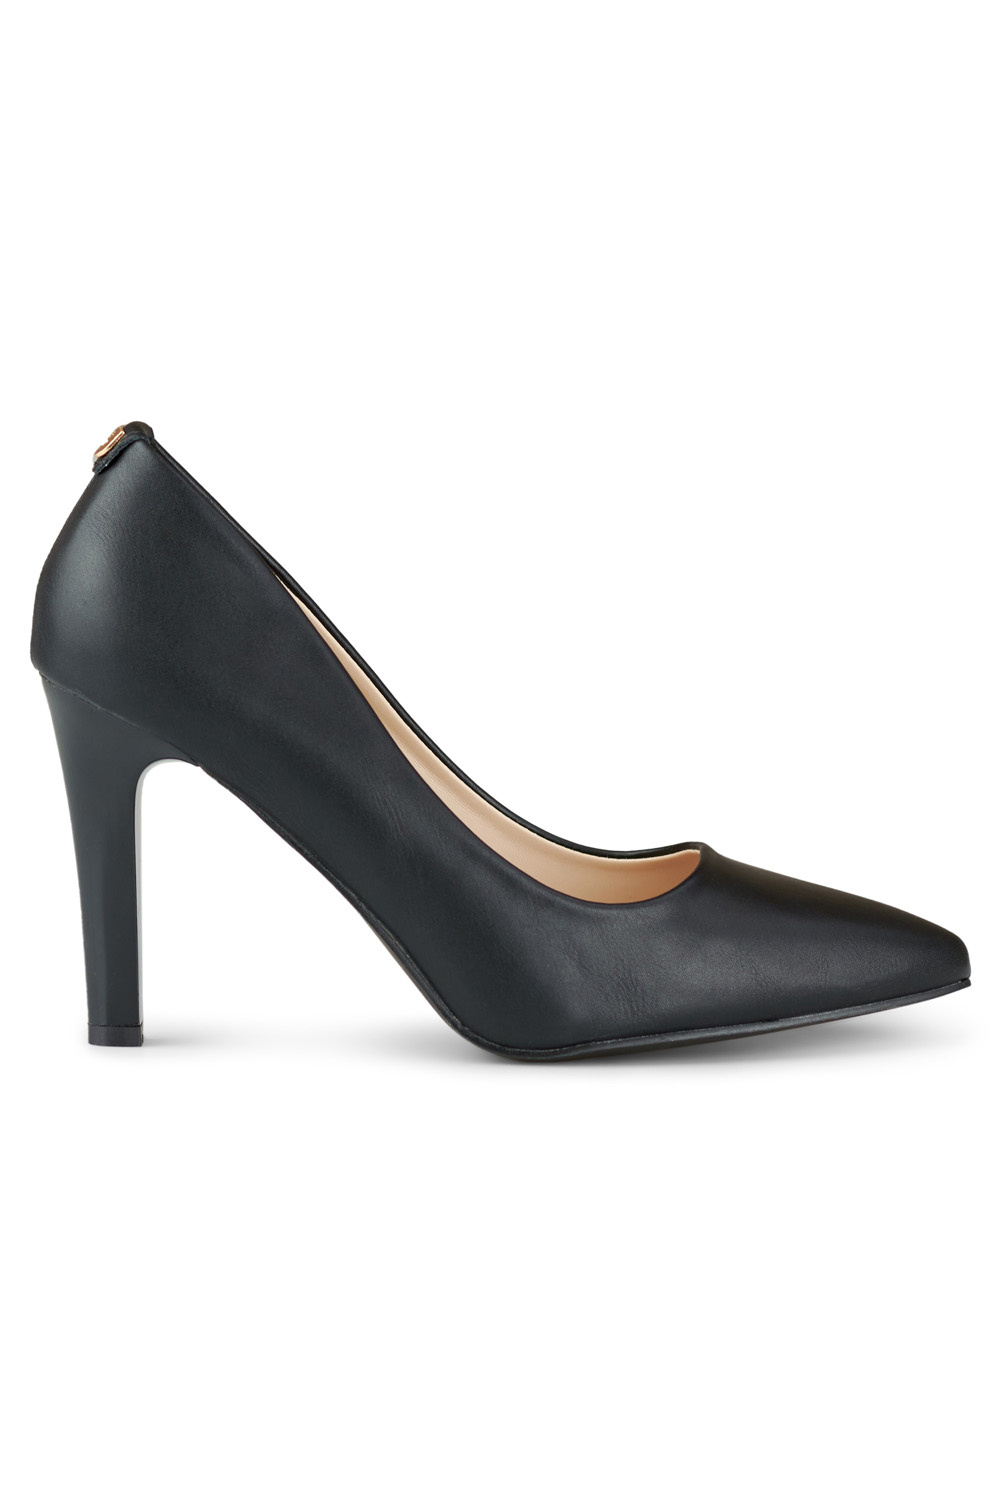  High heels model 190646 PRIMO  black